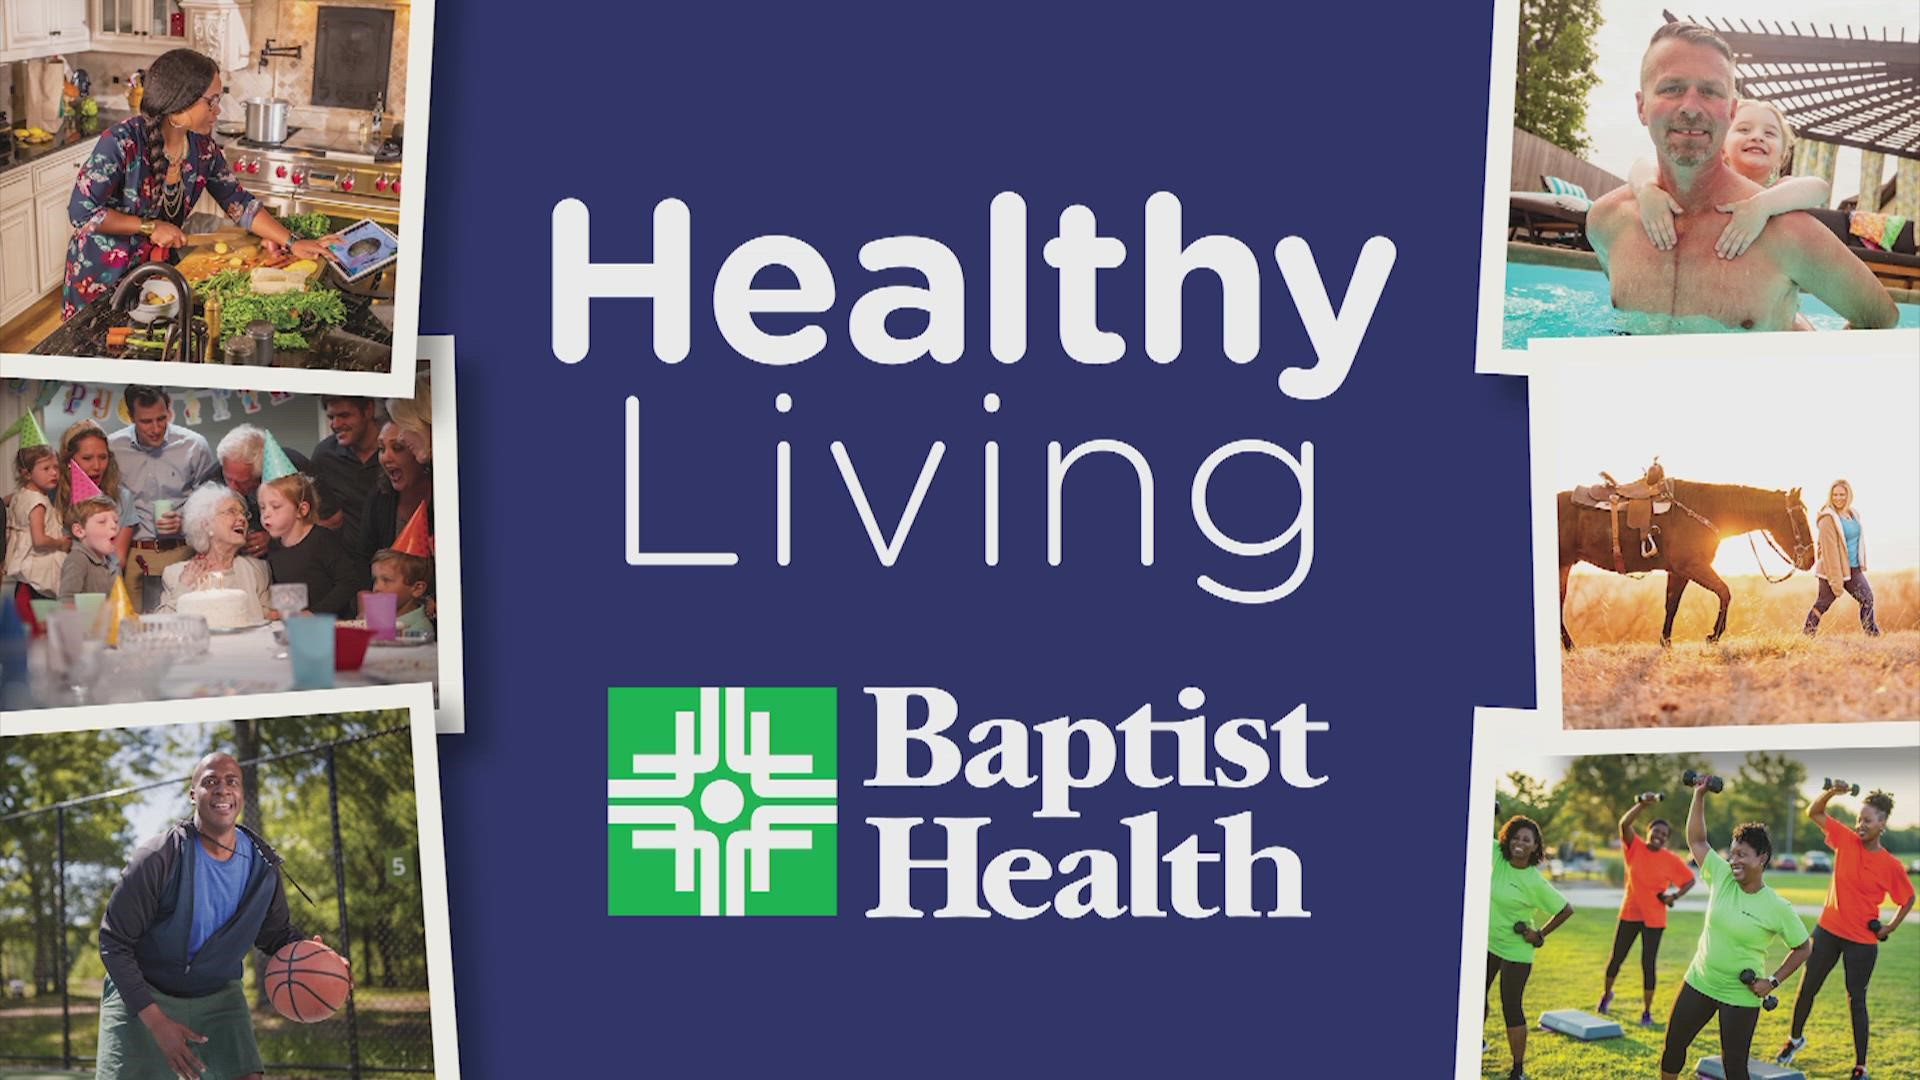 Sponsored by: Baptist Health